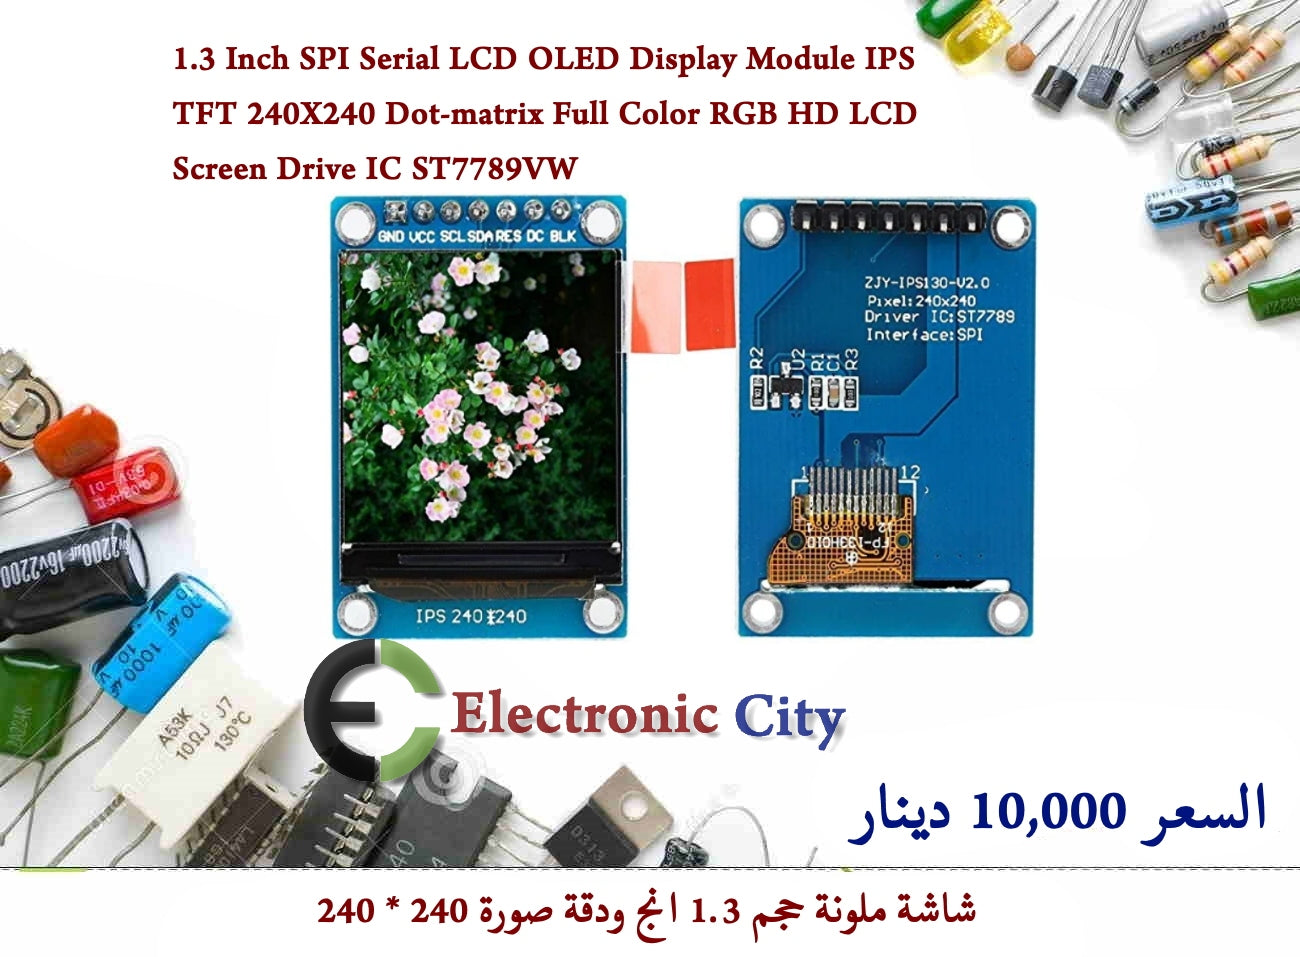 1.3 Inch SPI Serial LCD OLED Display Module IPS TFT 240X240 Dot-matrix Full Color RGB HD LCD Screen Drive IC ST7789VW